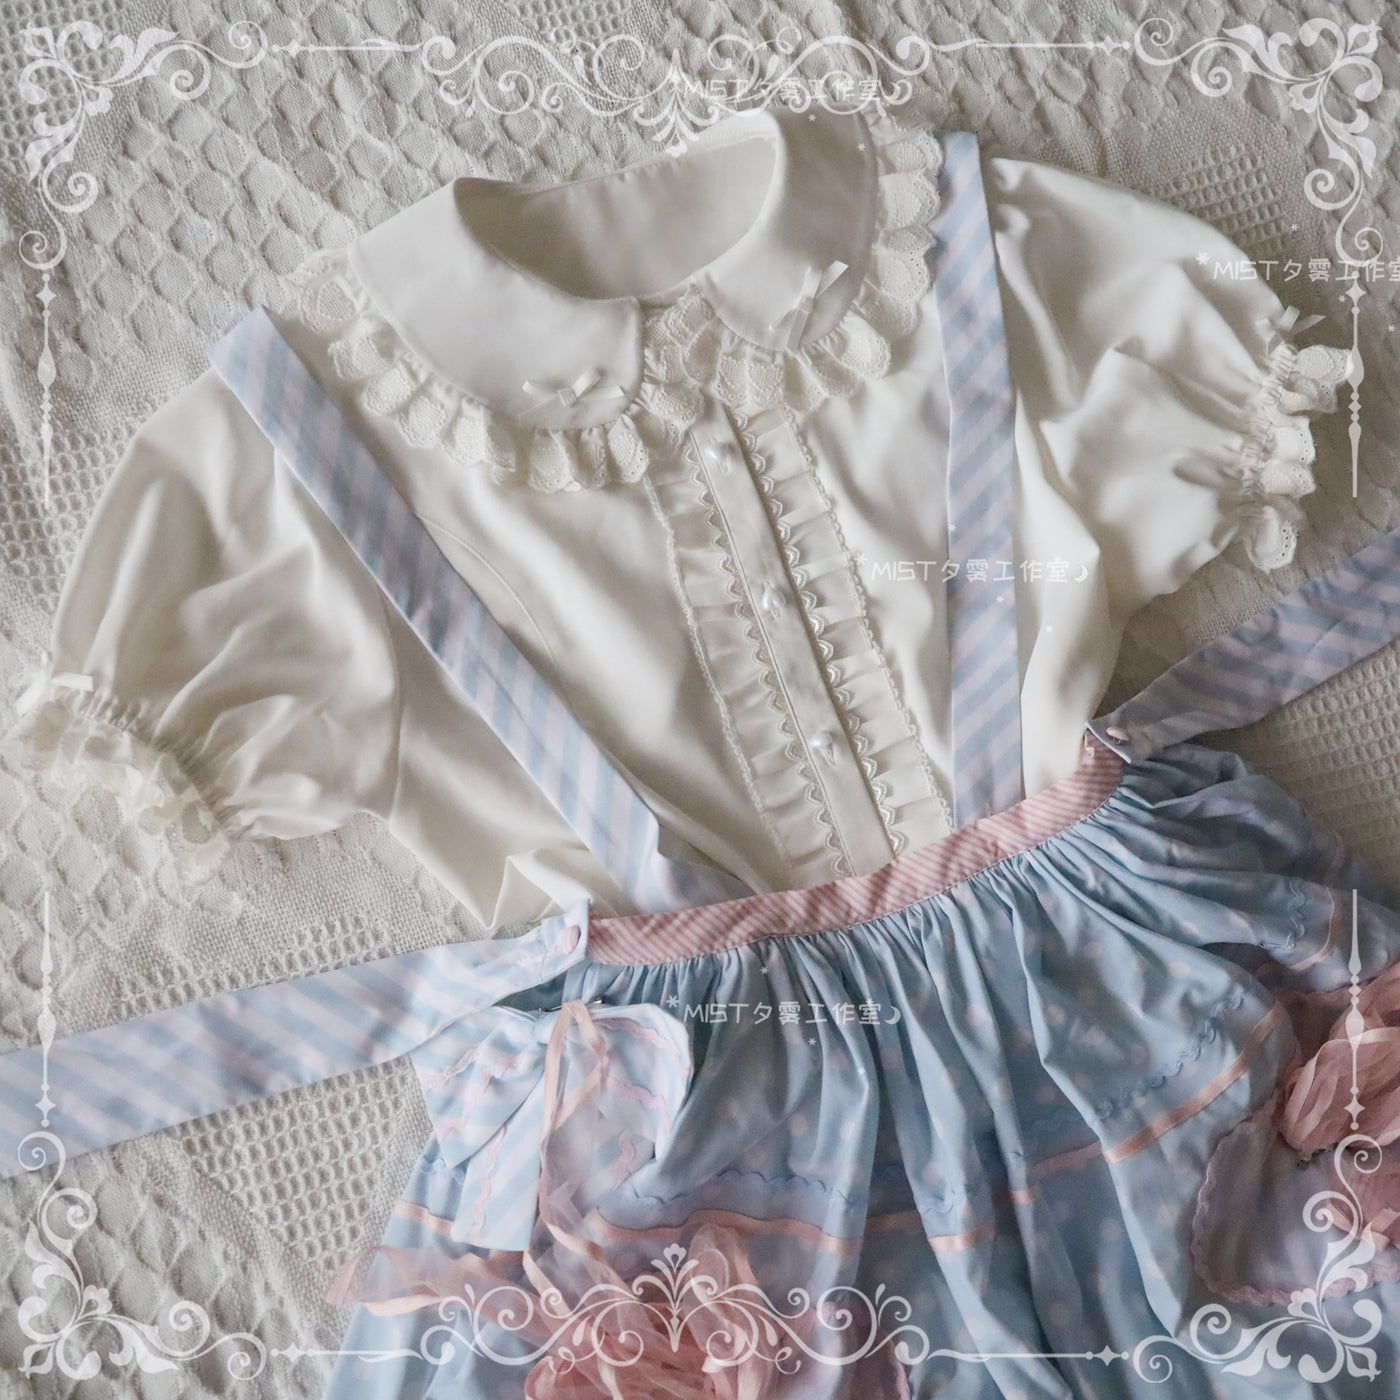 (BuyForMe) MIST~Sweet Short Sleeve Chiffon Lolita Blouse   